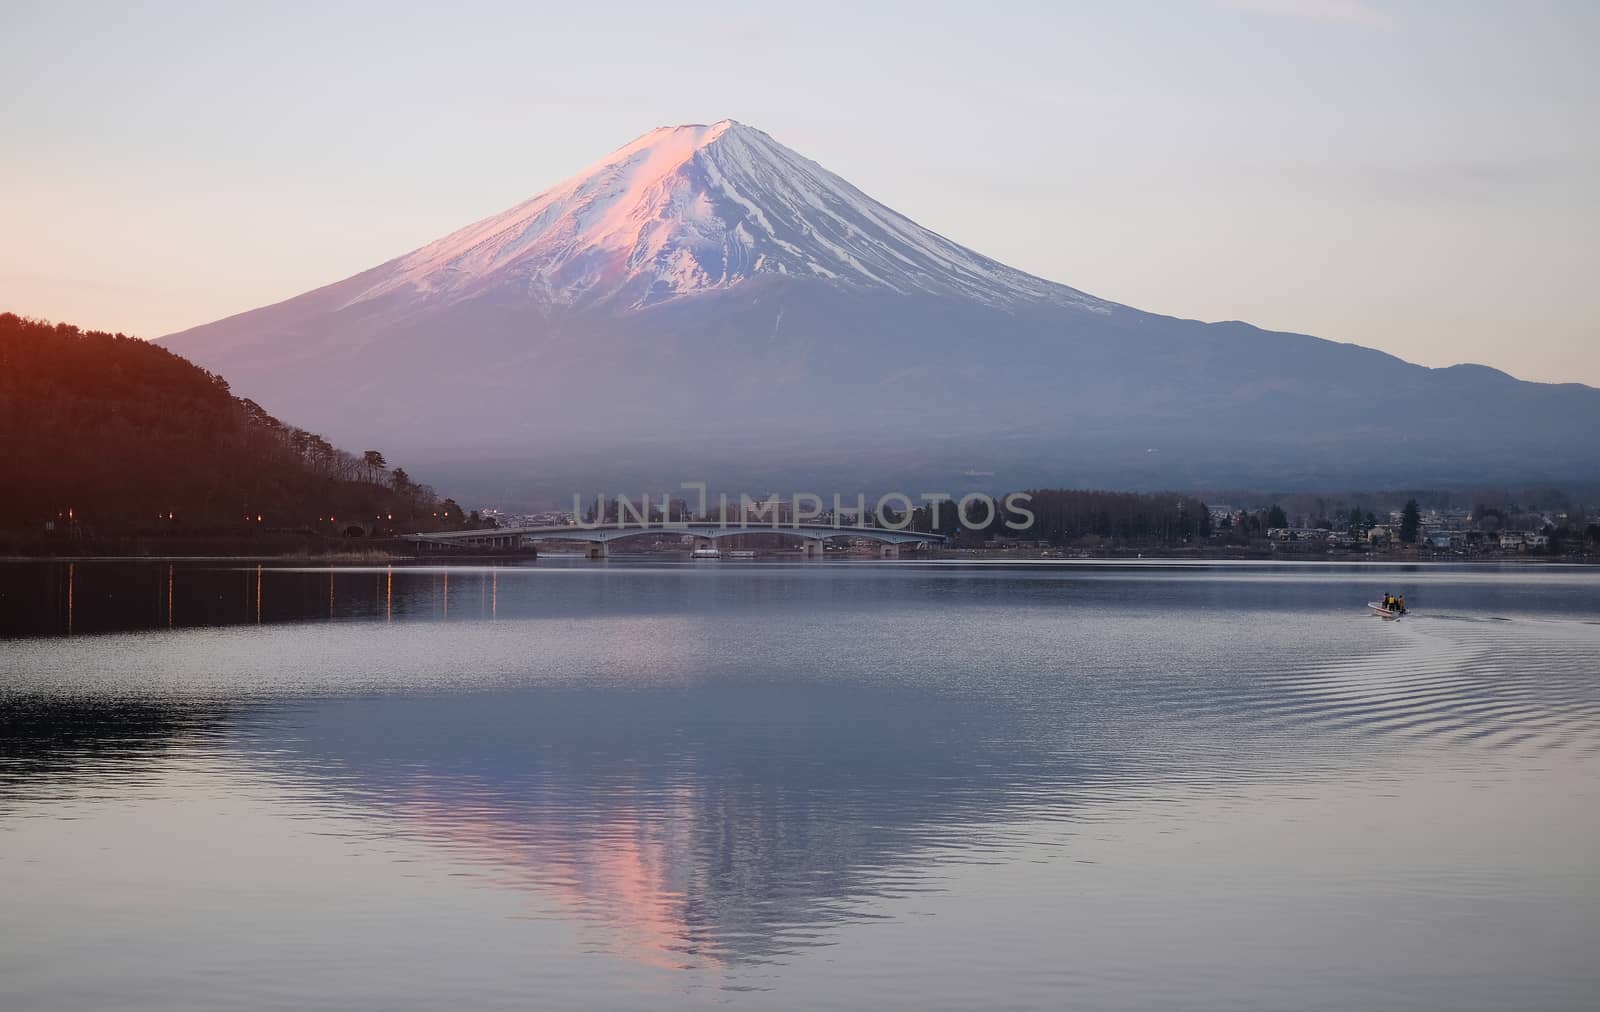 Beautiful sunrise view of  Mountain Fuji and Lake Kawaguchiko in Japan